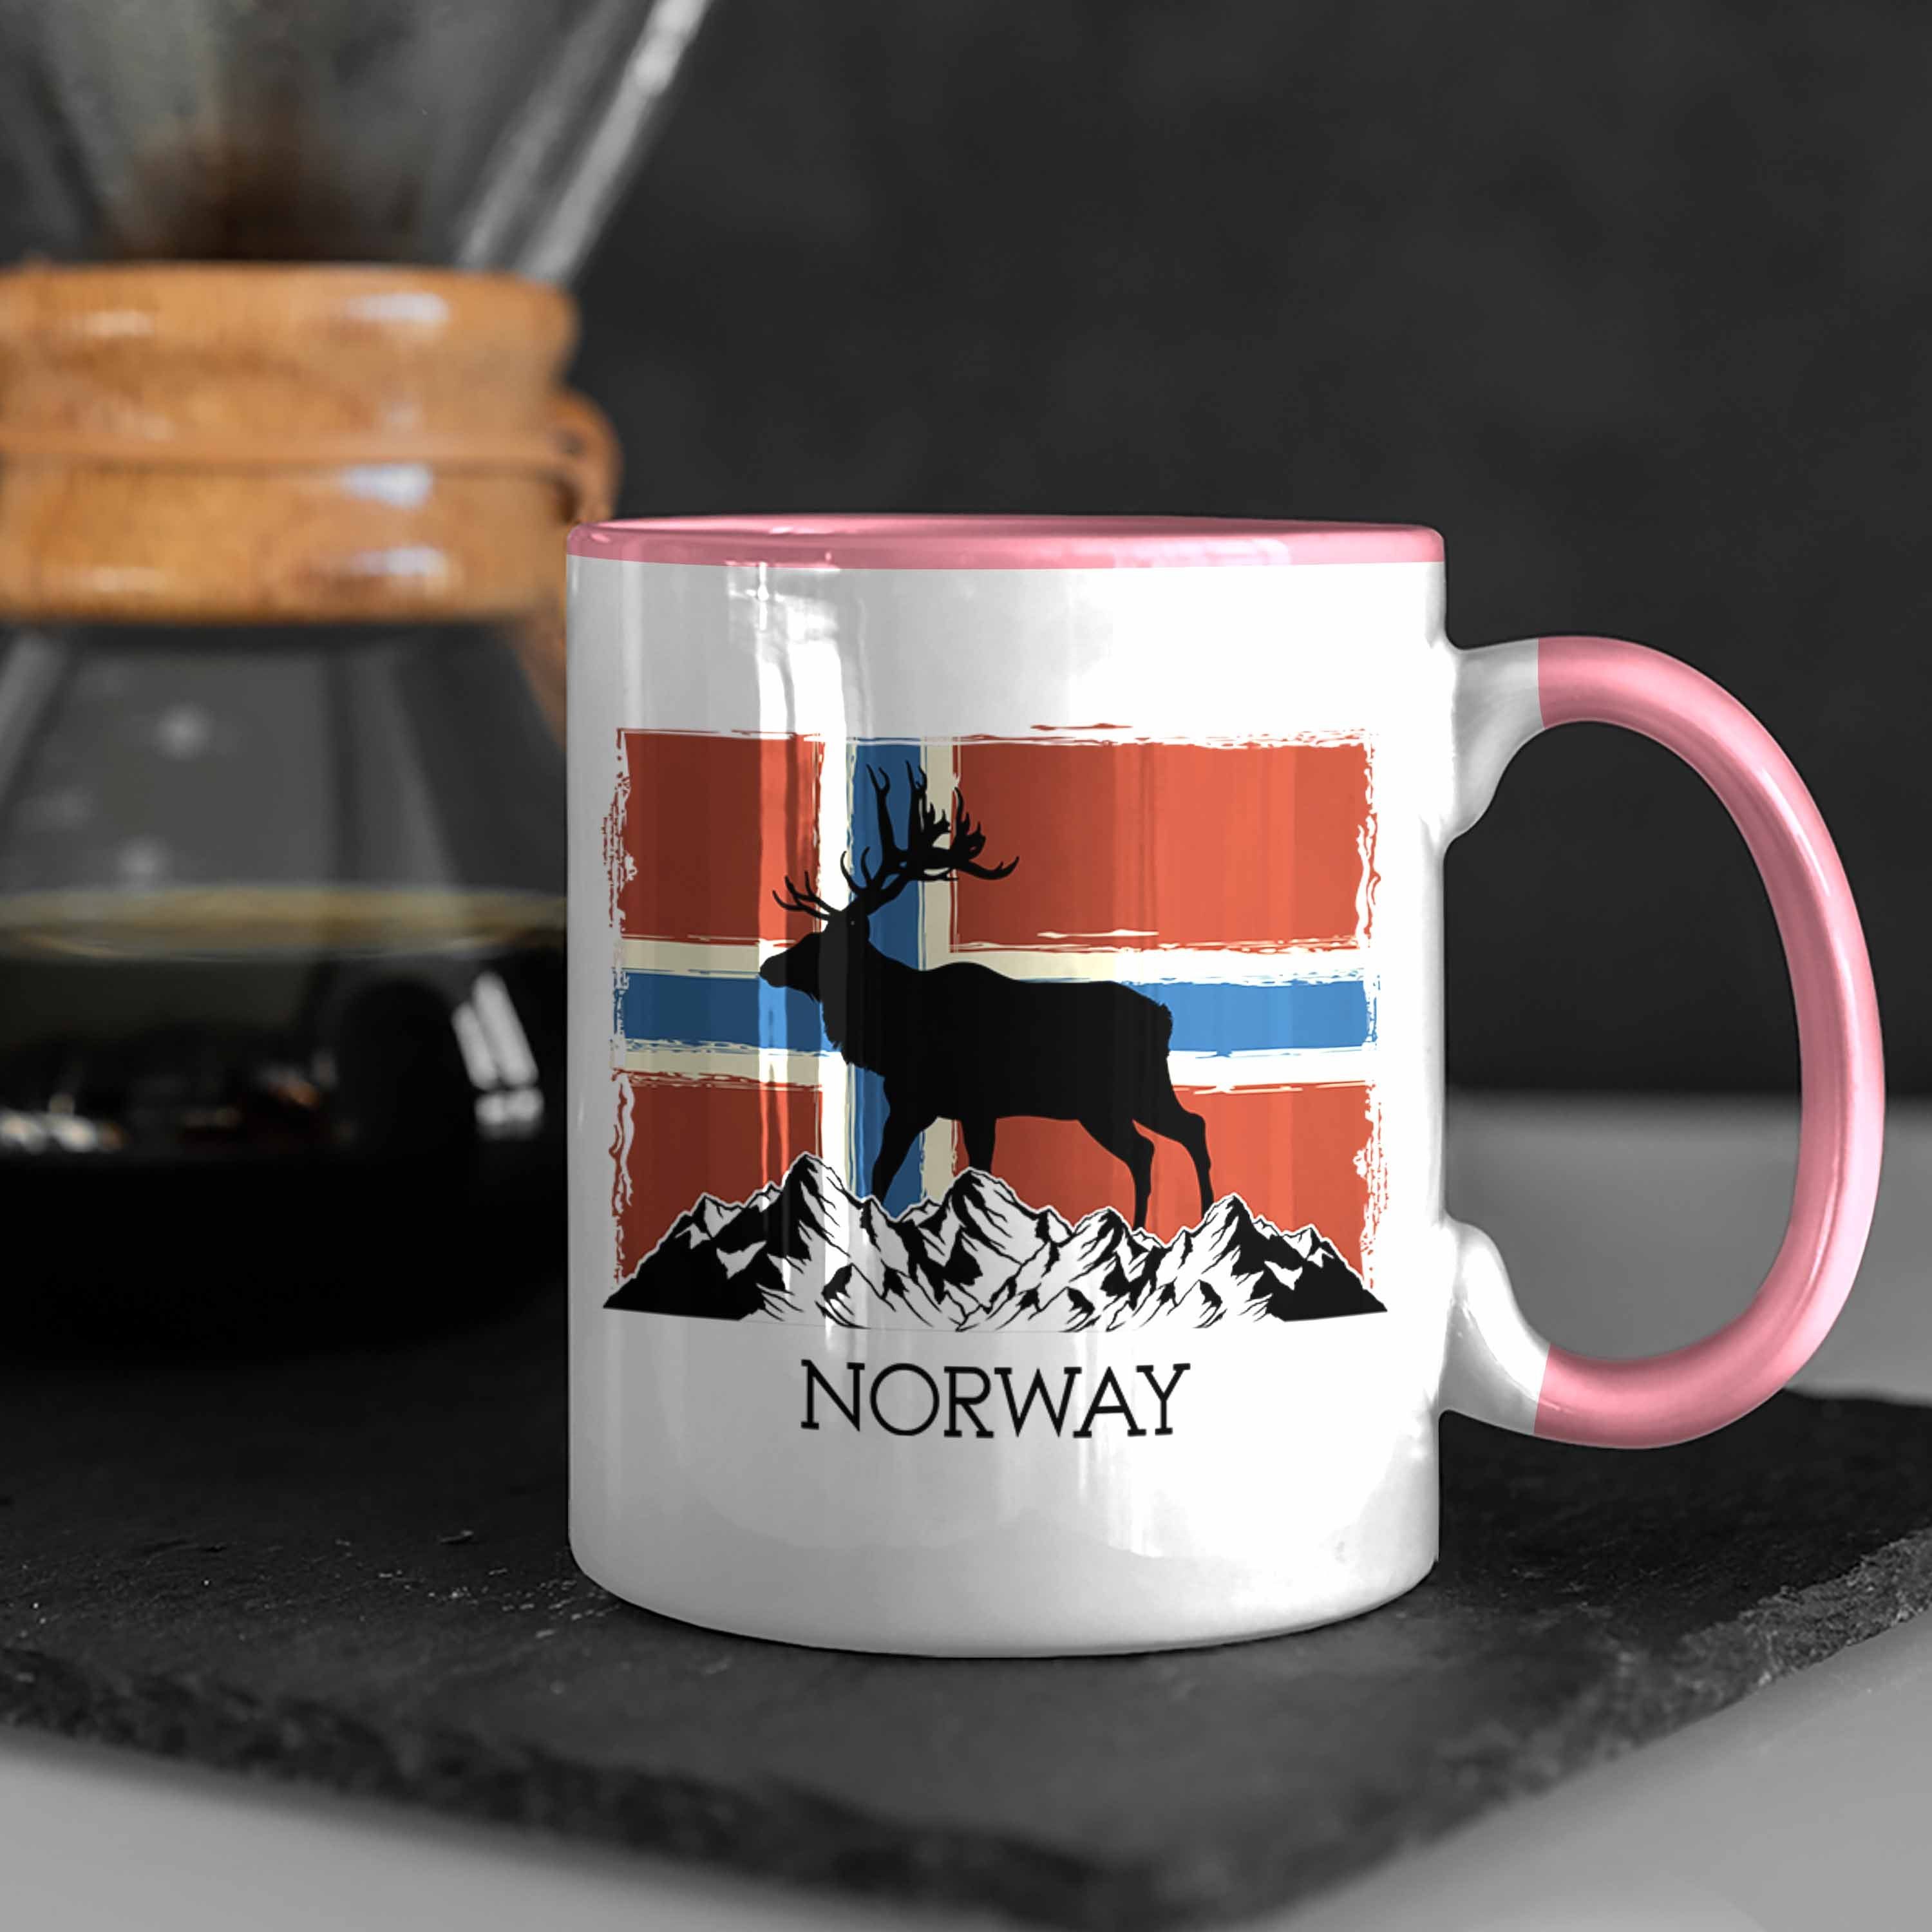 Norway Norwegen Tasse Nordkap Trendation Geschenke - Tasse Elch Rosa Flagge Trendation